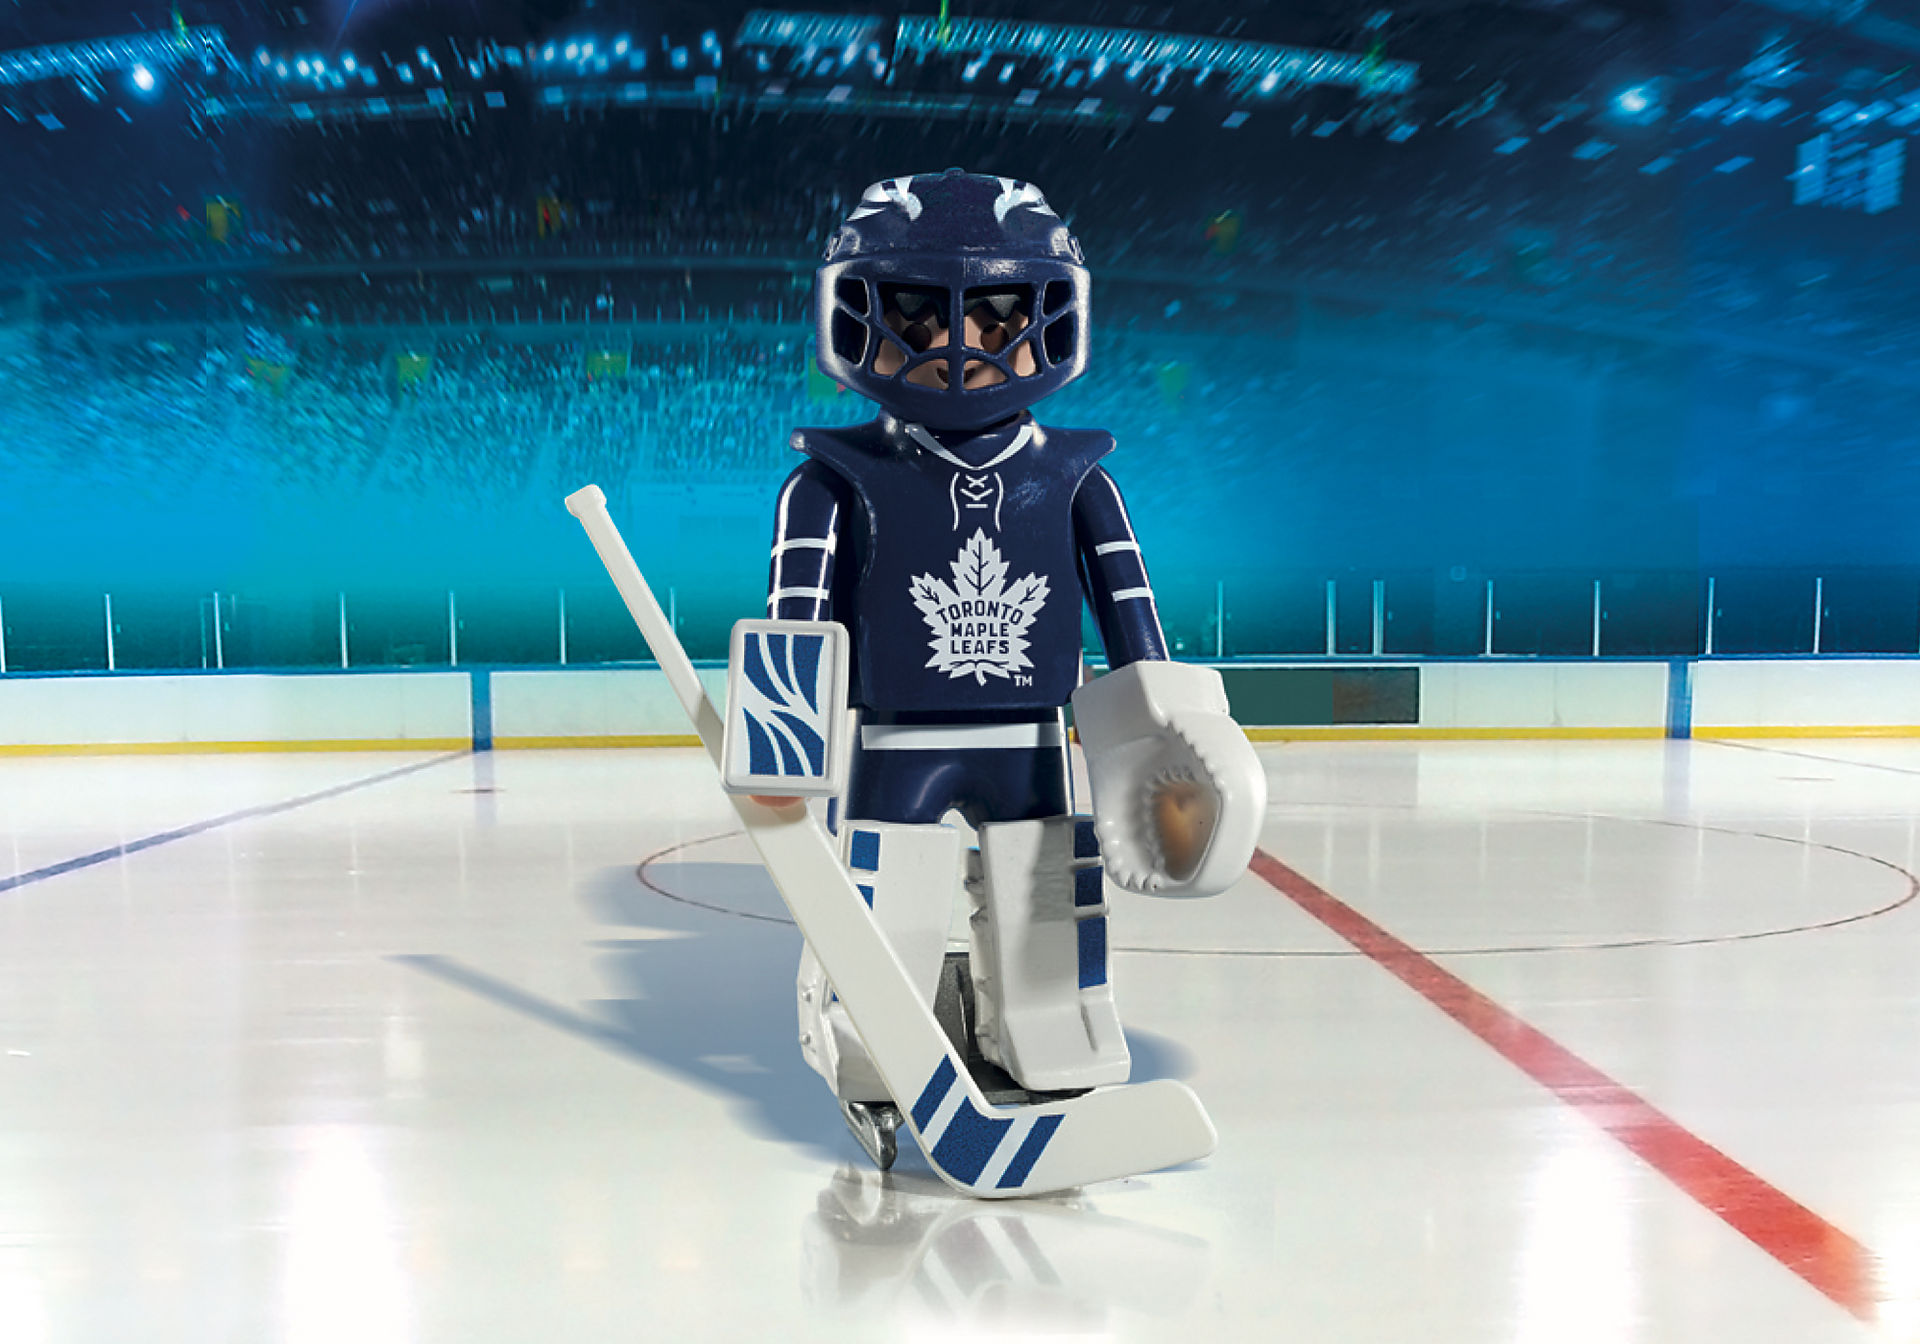 5083 NHL® Toronto Maple Leafs® Goalie zoom image1